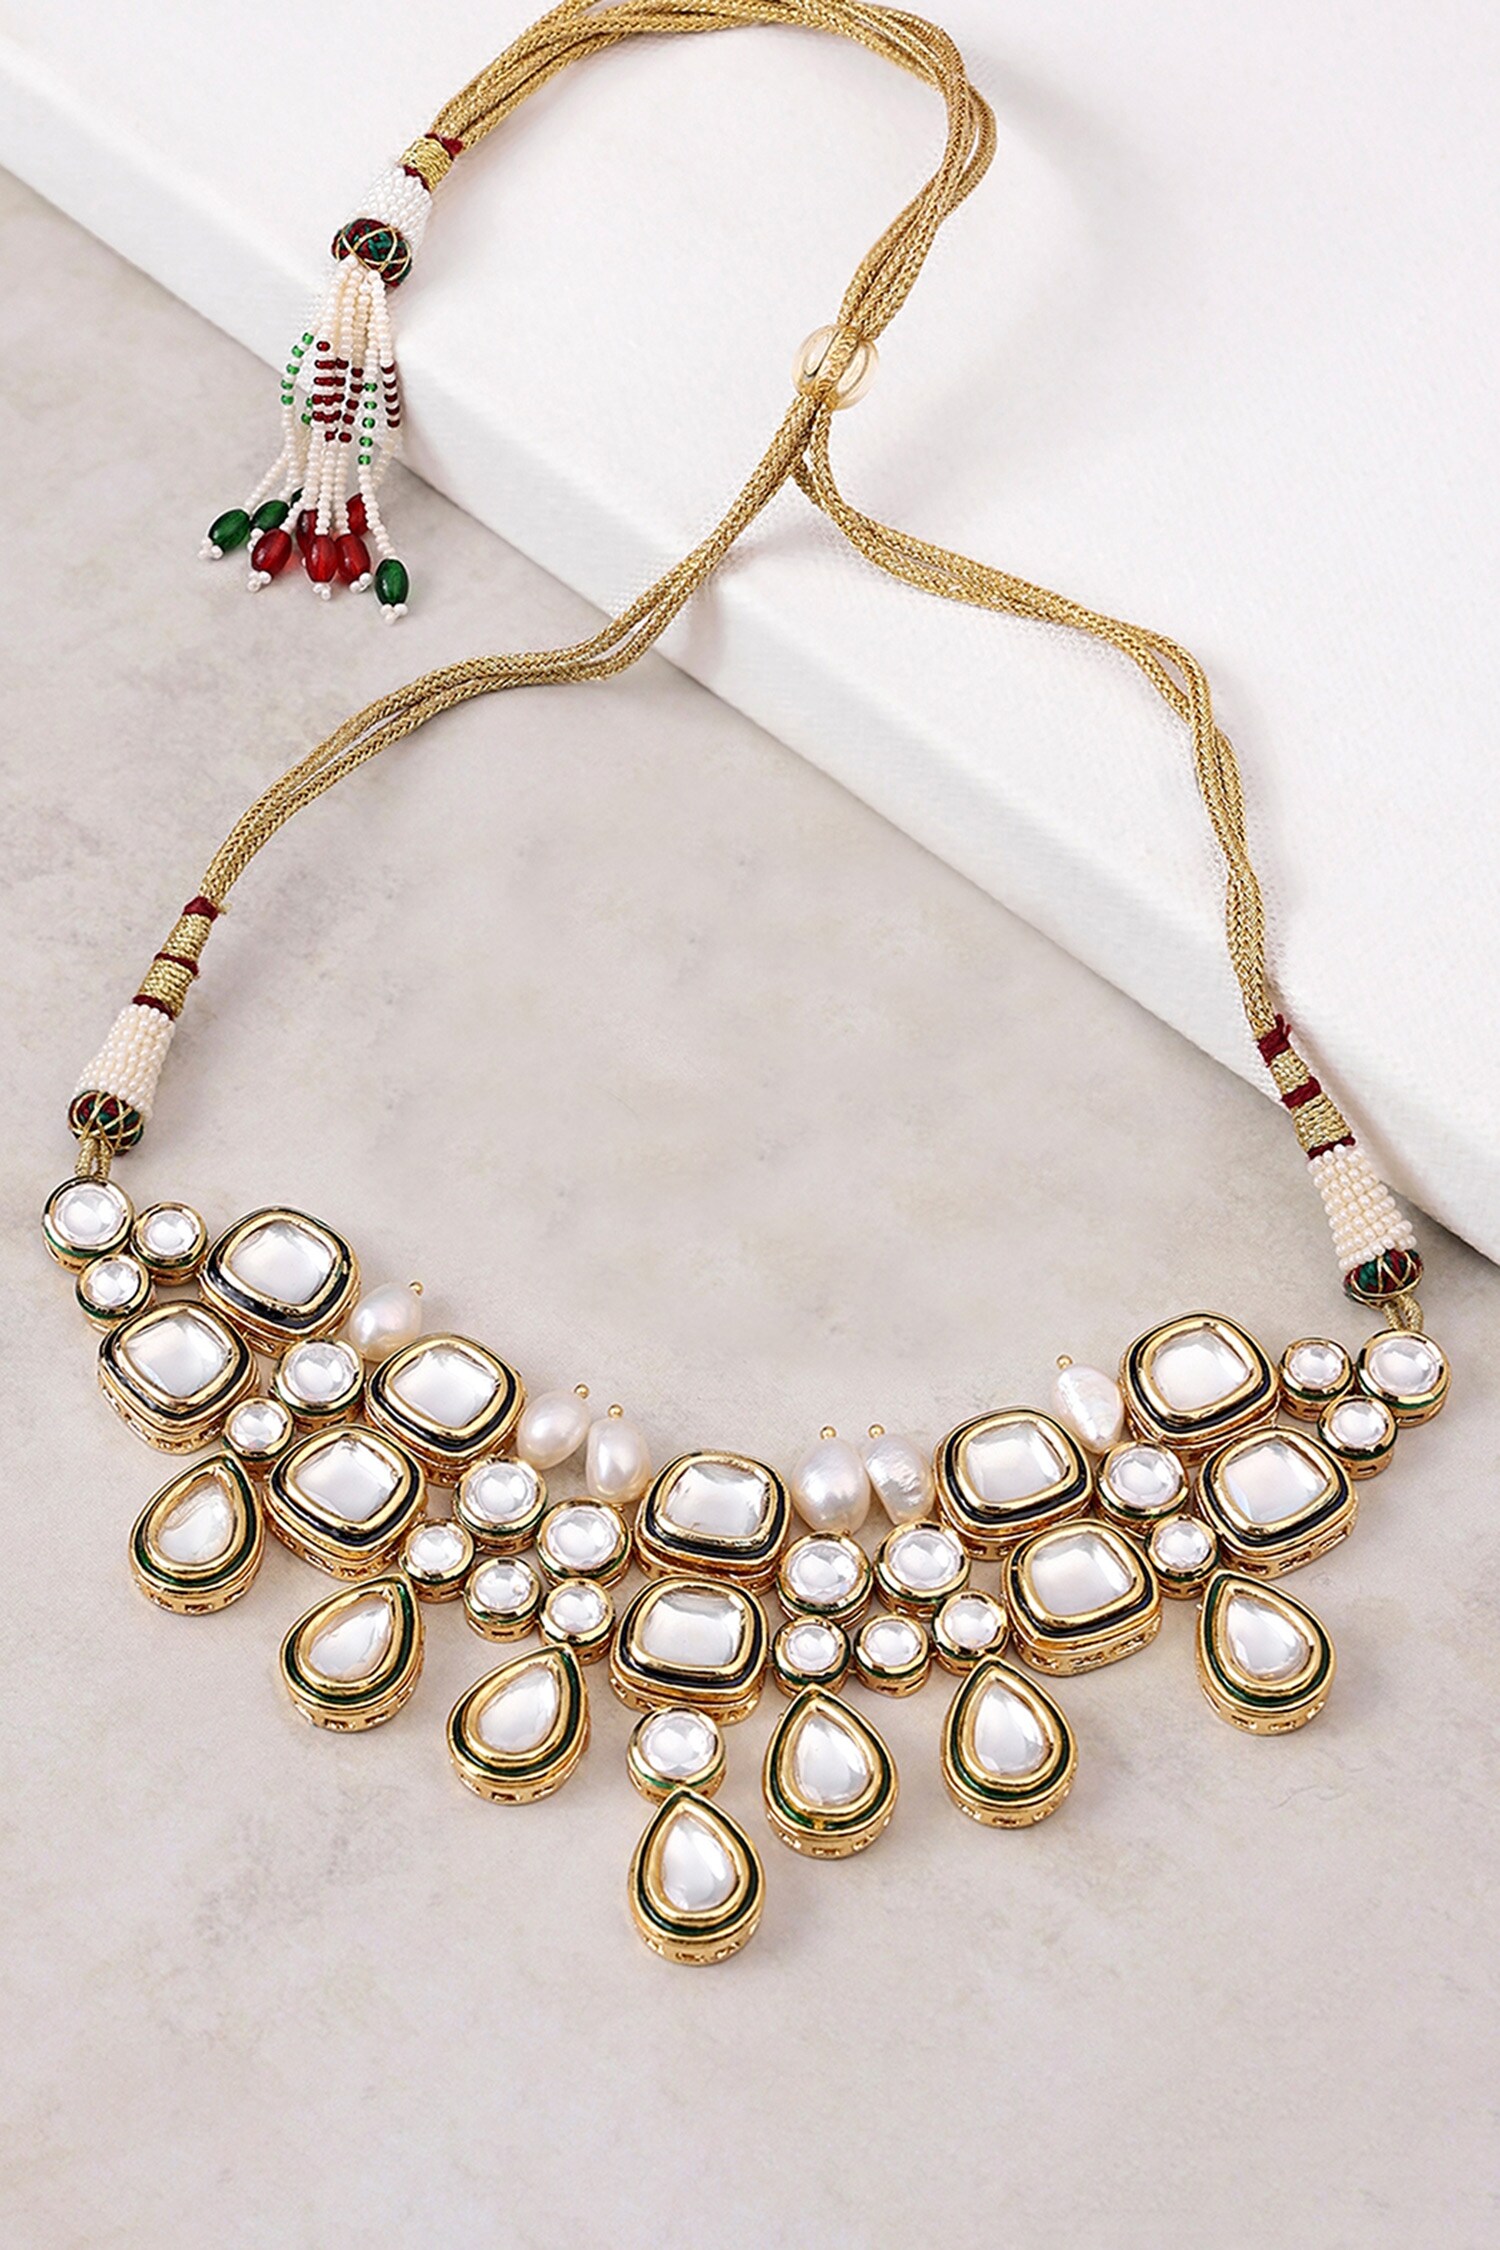 joules by radhika Polki Embellished Choker Necklace